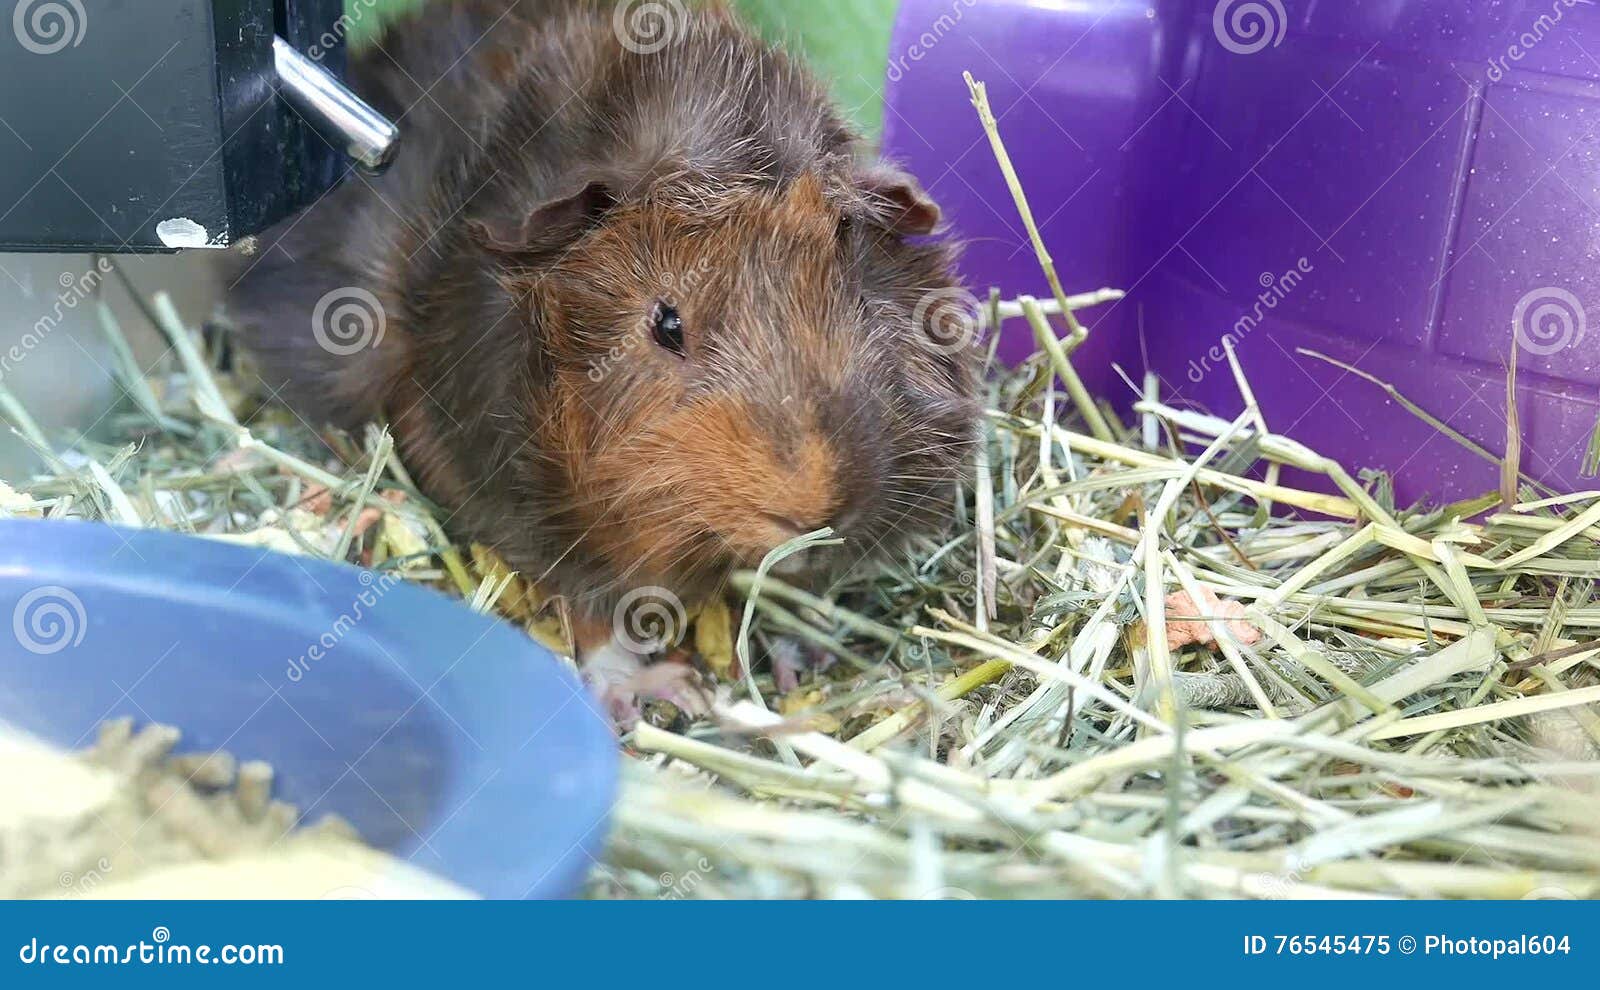 petsmart guinea pigs